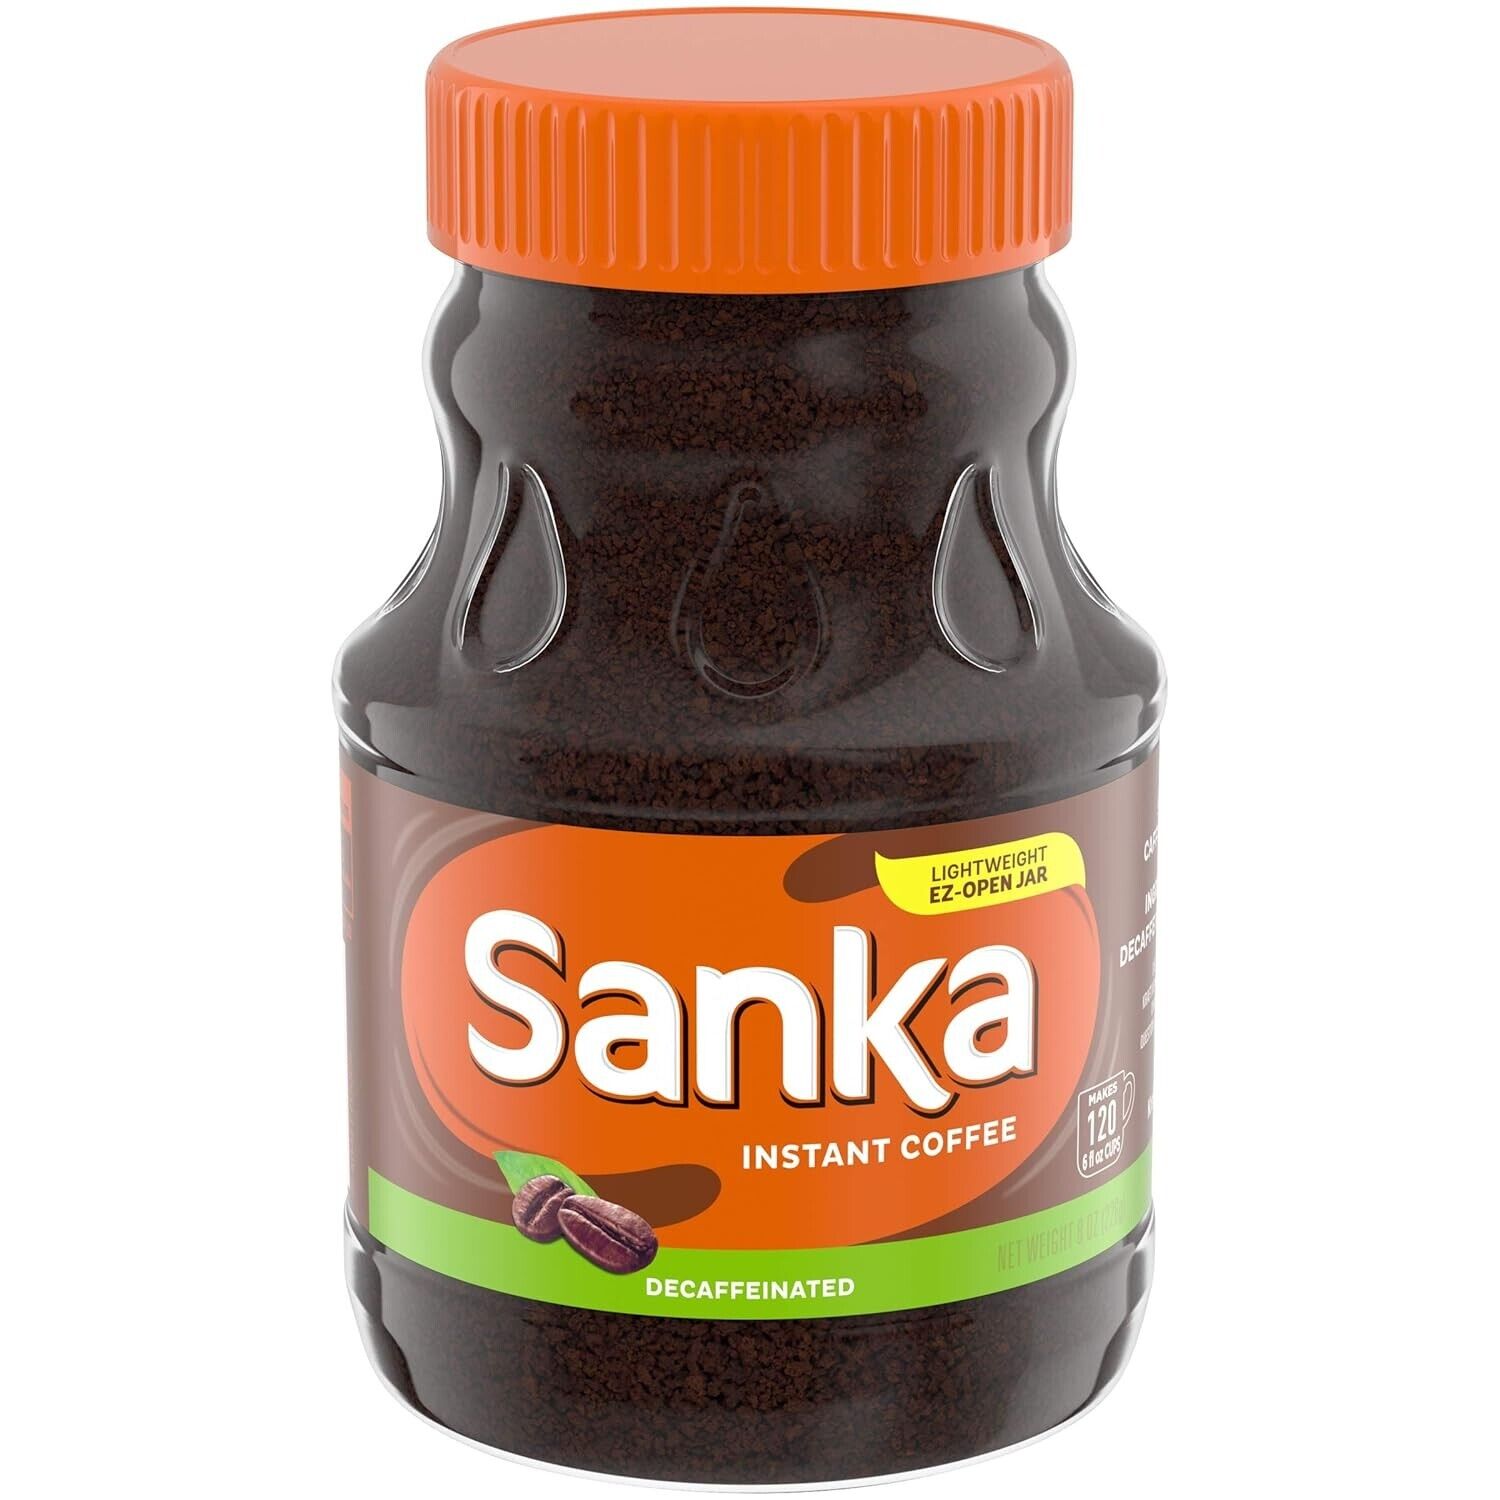 Sanka Decaf Instant Coffee Delicious Flavor Smooth Taste Drinking 8Oz Jar 1Pck